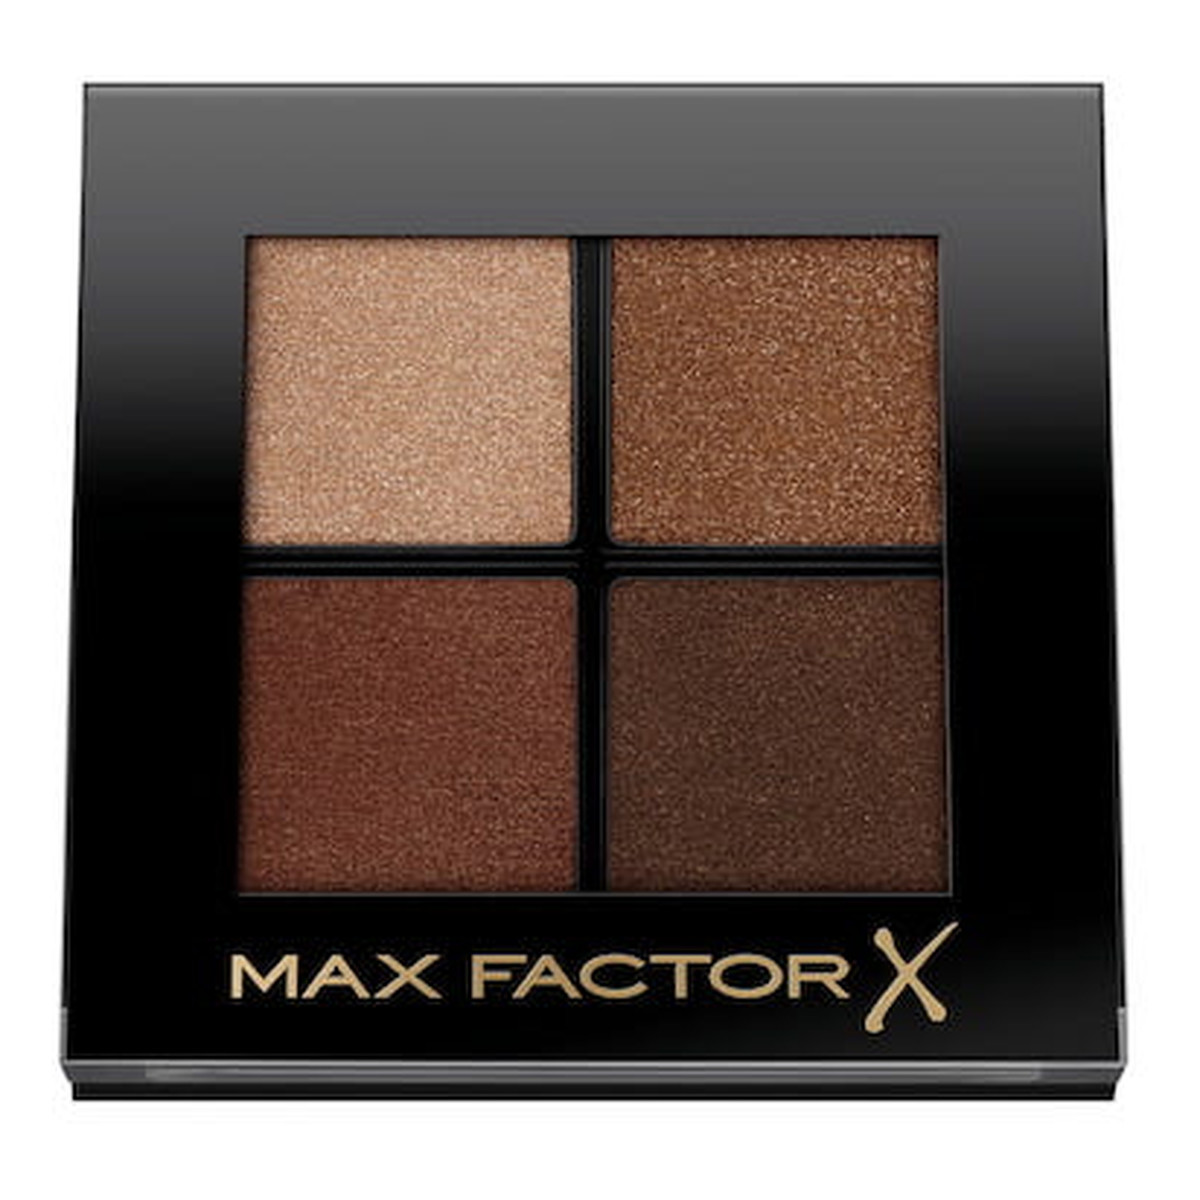 Max Factor Colour Expert Mini Palette Paleta cieni do powiek 7g